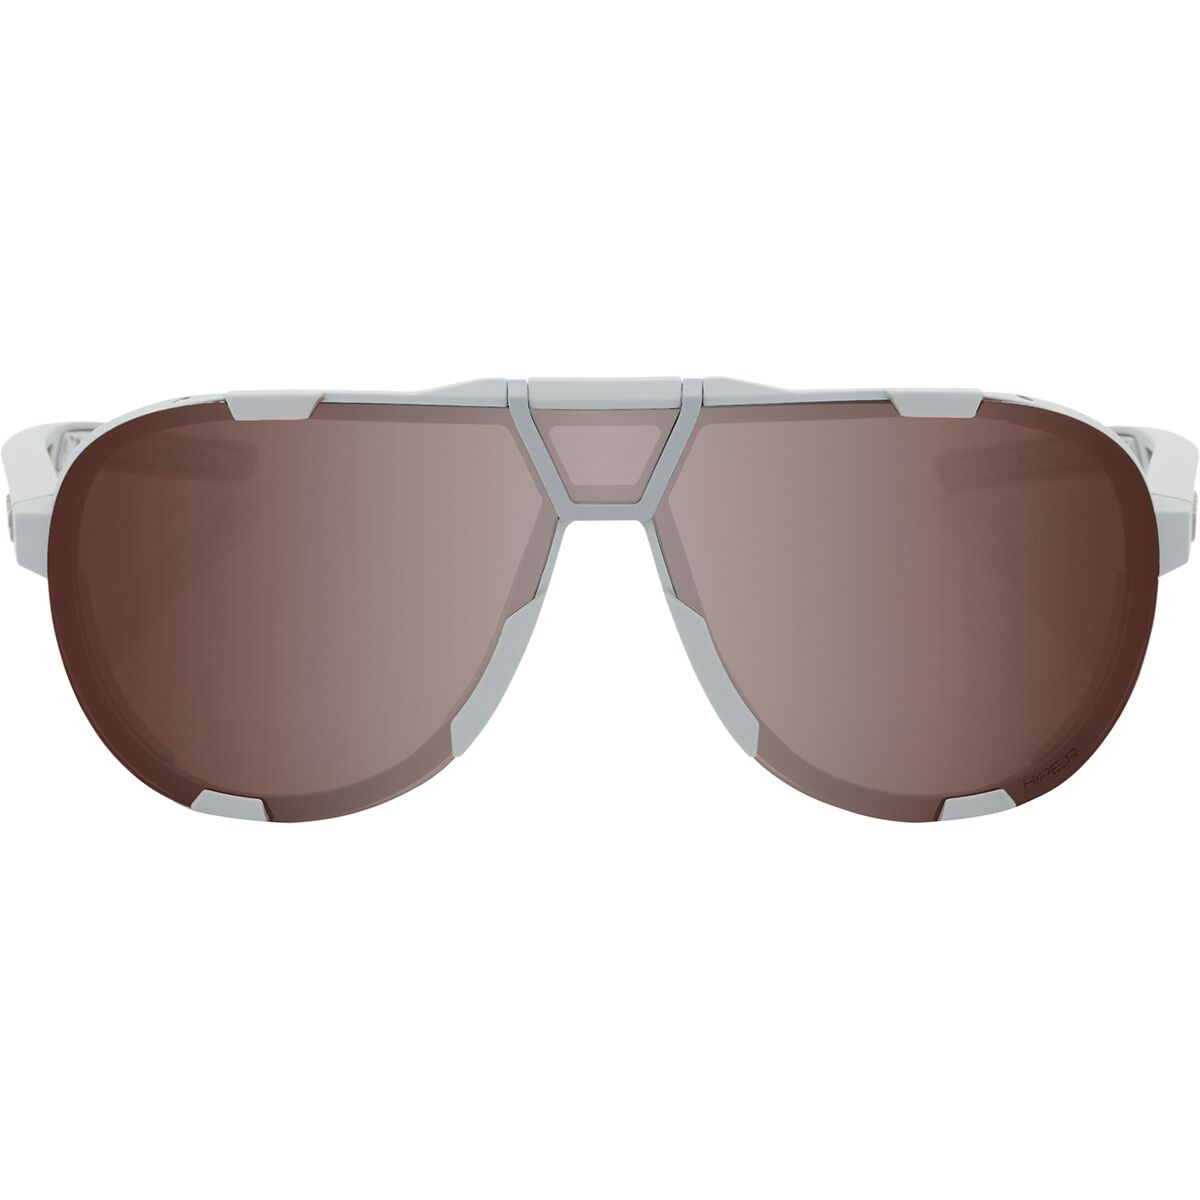  100% Westcraft Sunglasses - Accessories